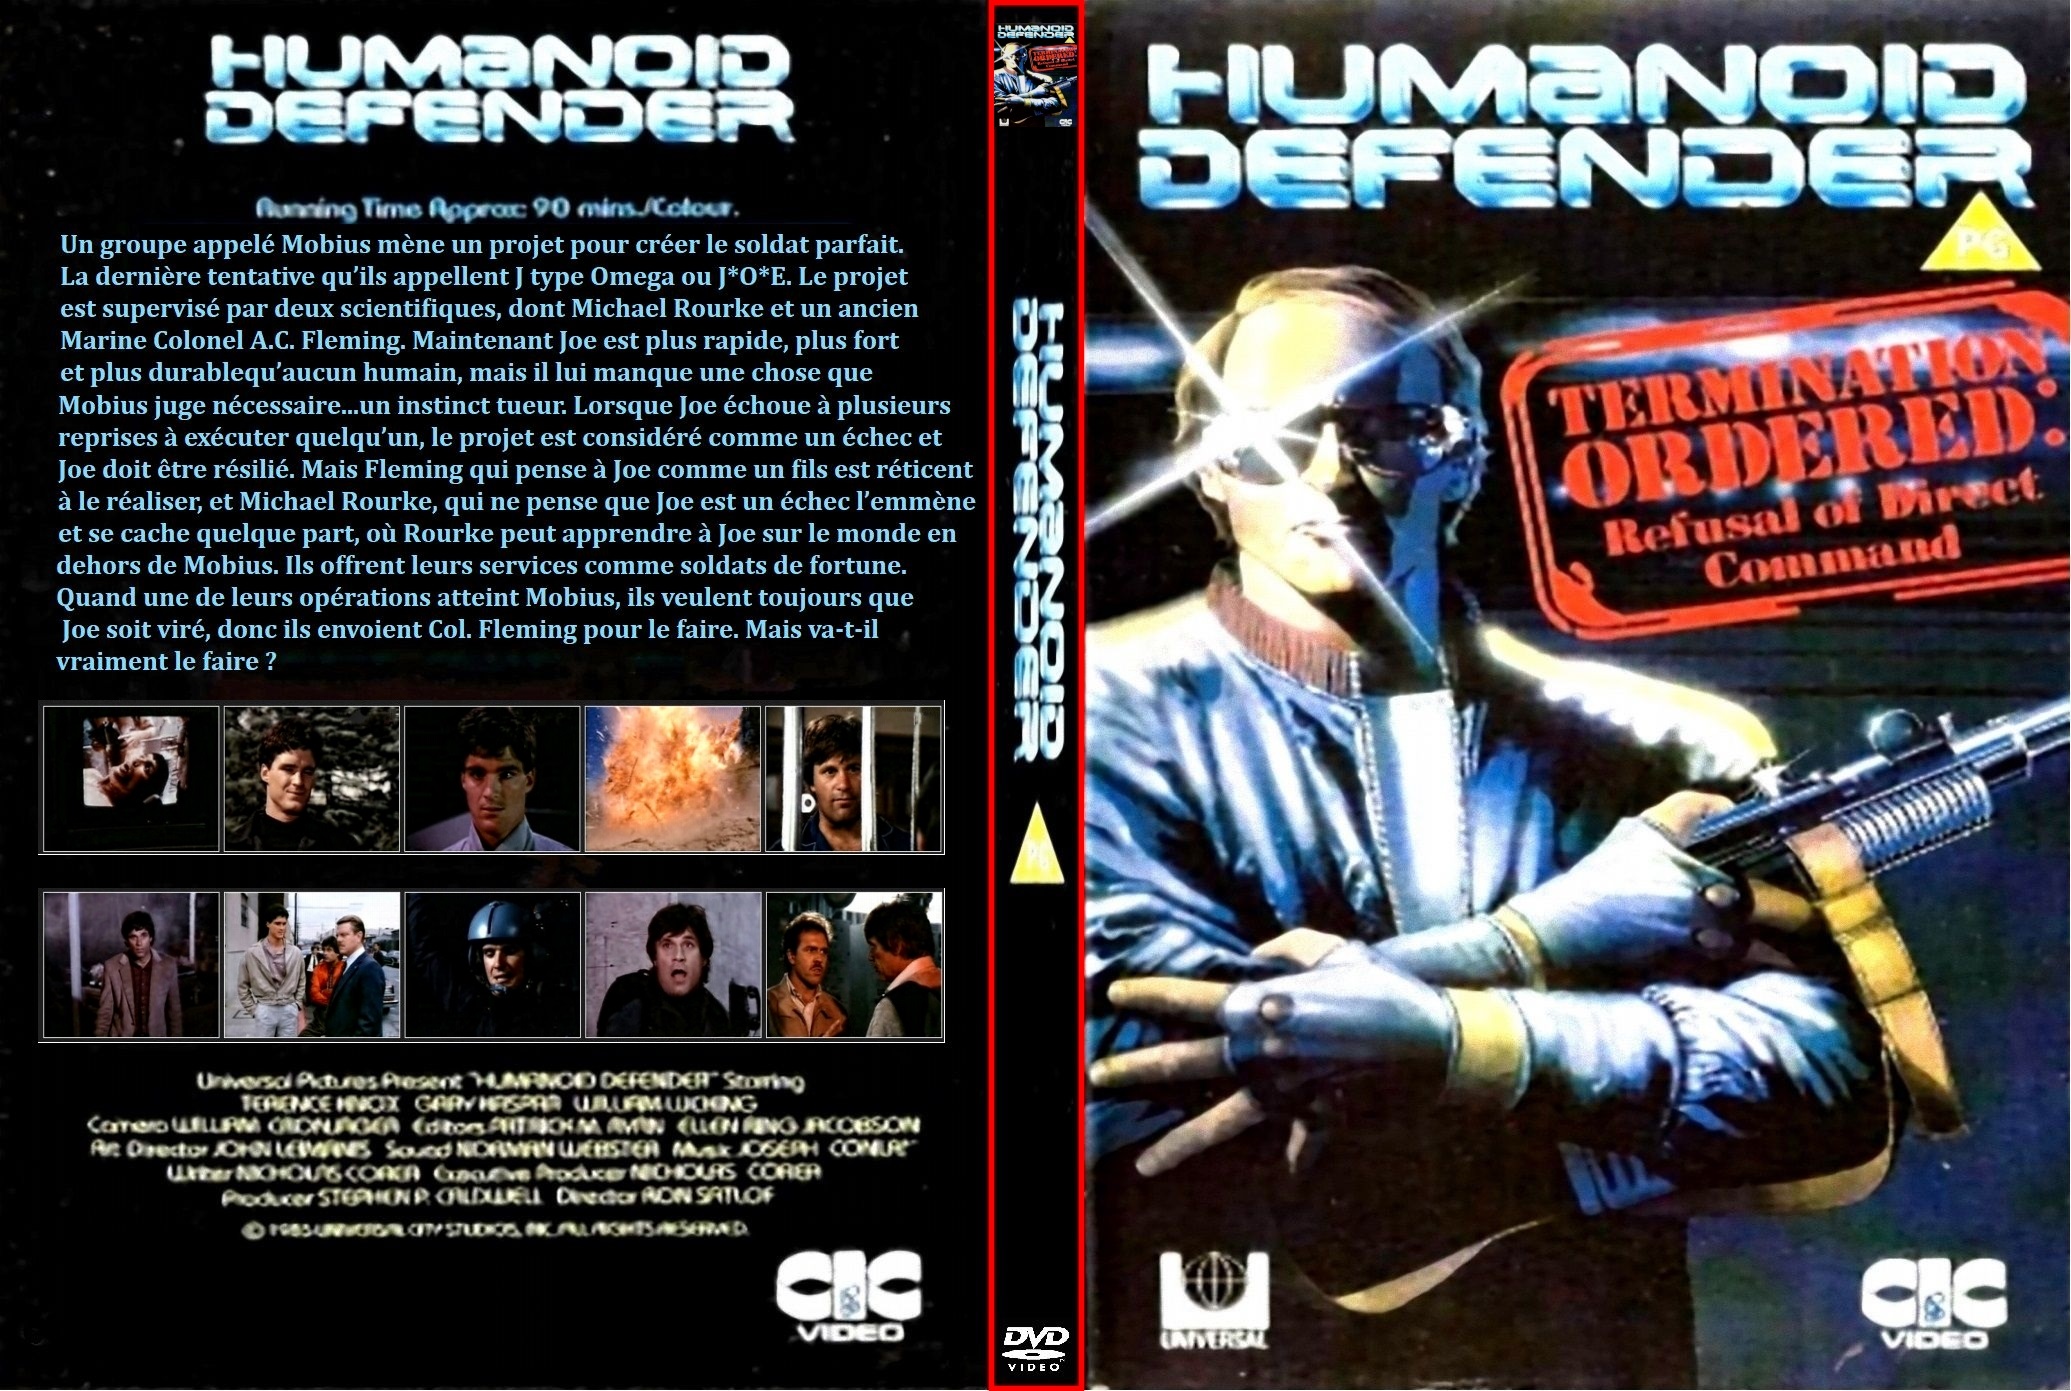 Jaquette DVD Humanoid Defender custom 